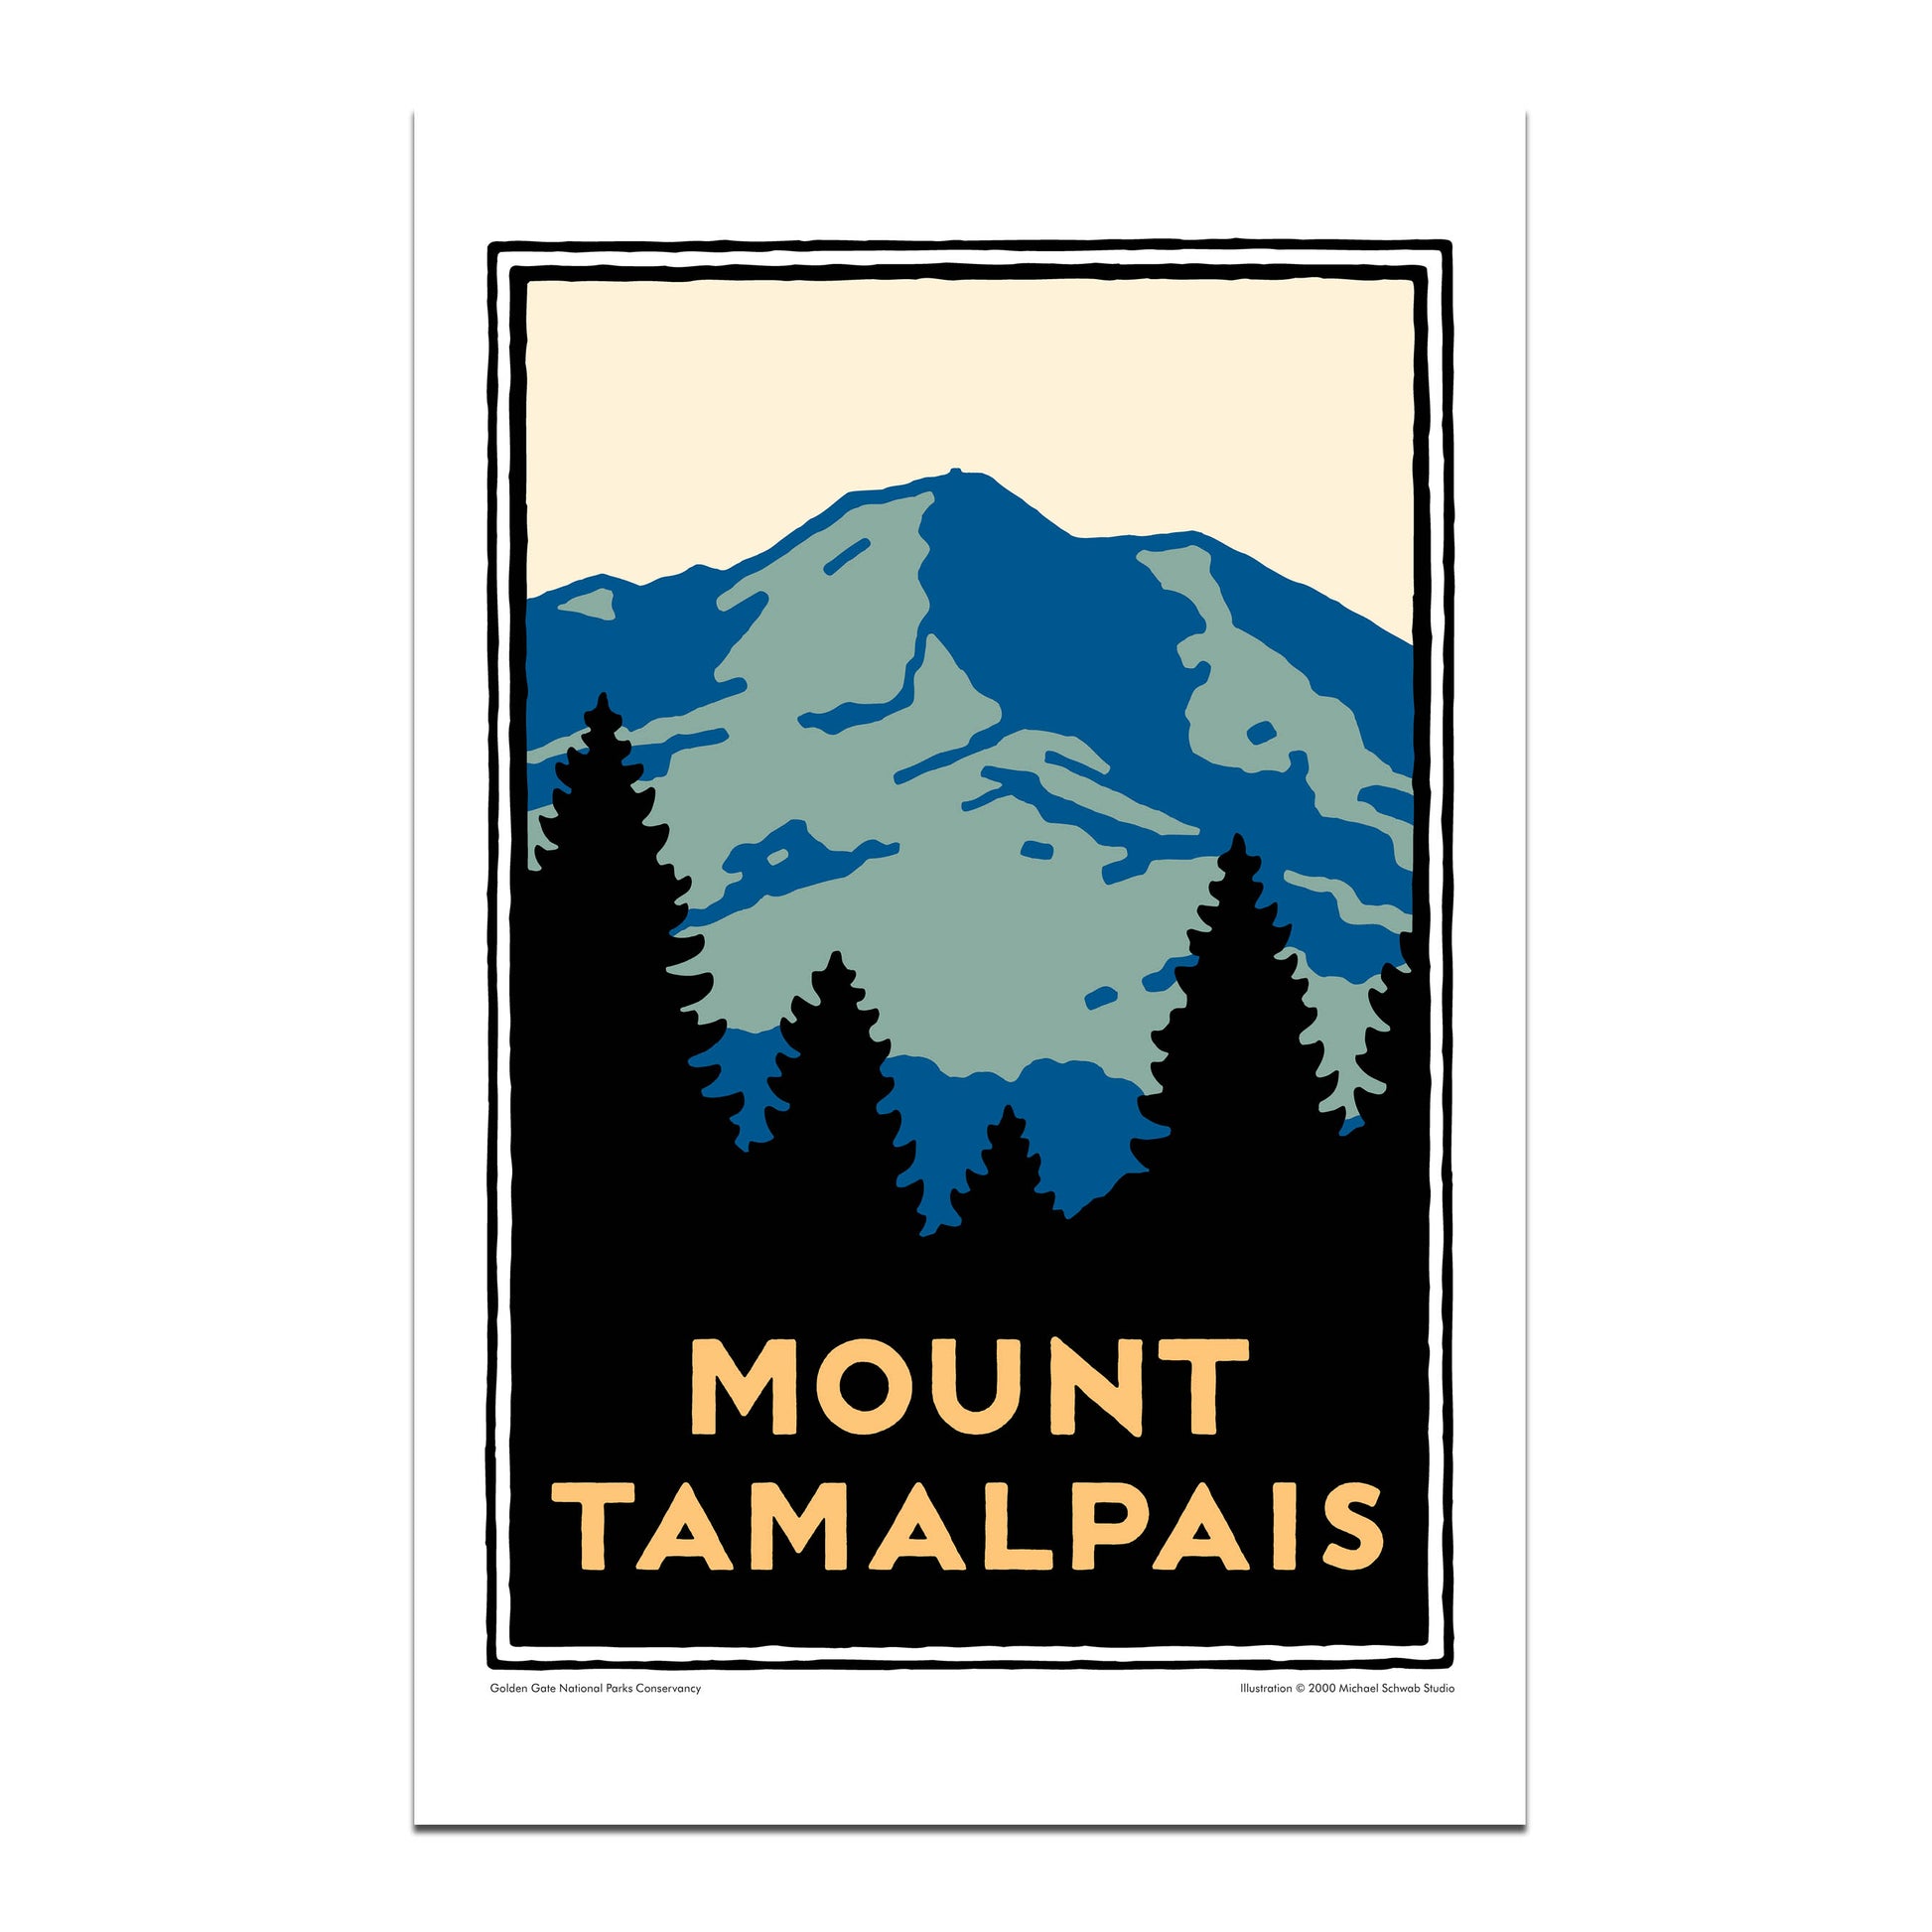 Unframed 11 x 17 inch Mount Tamalpais art print, illustration by Michael Schwab.